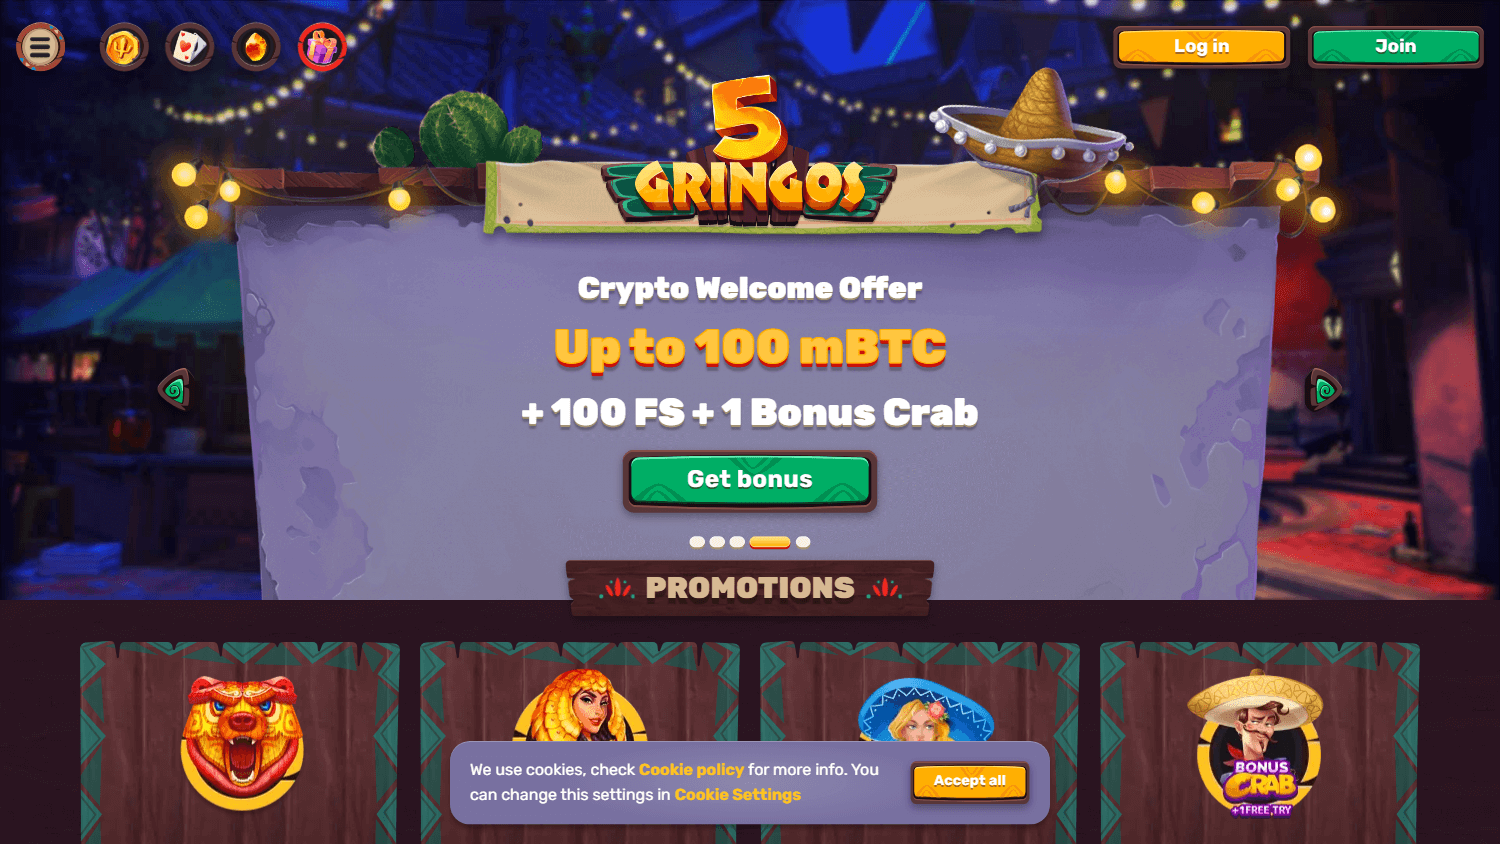 5gringos_casino_promotions_desktop